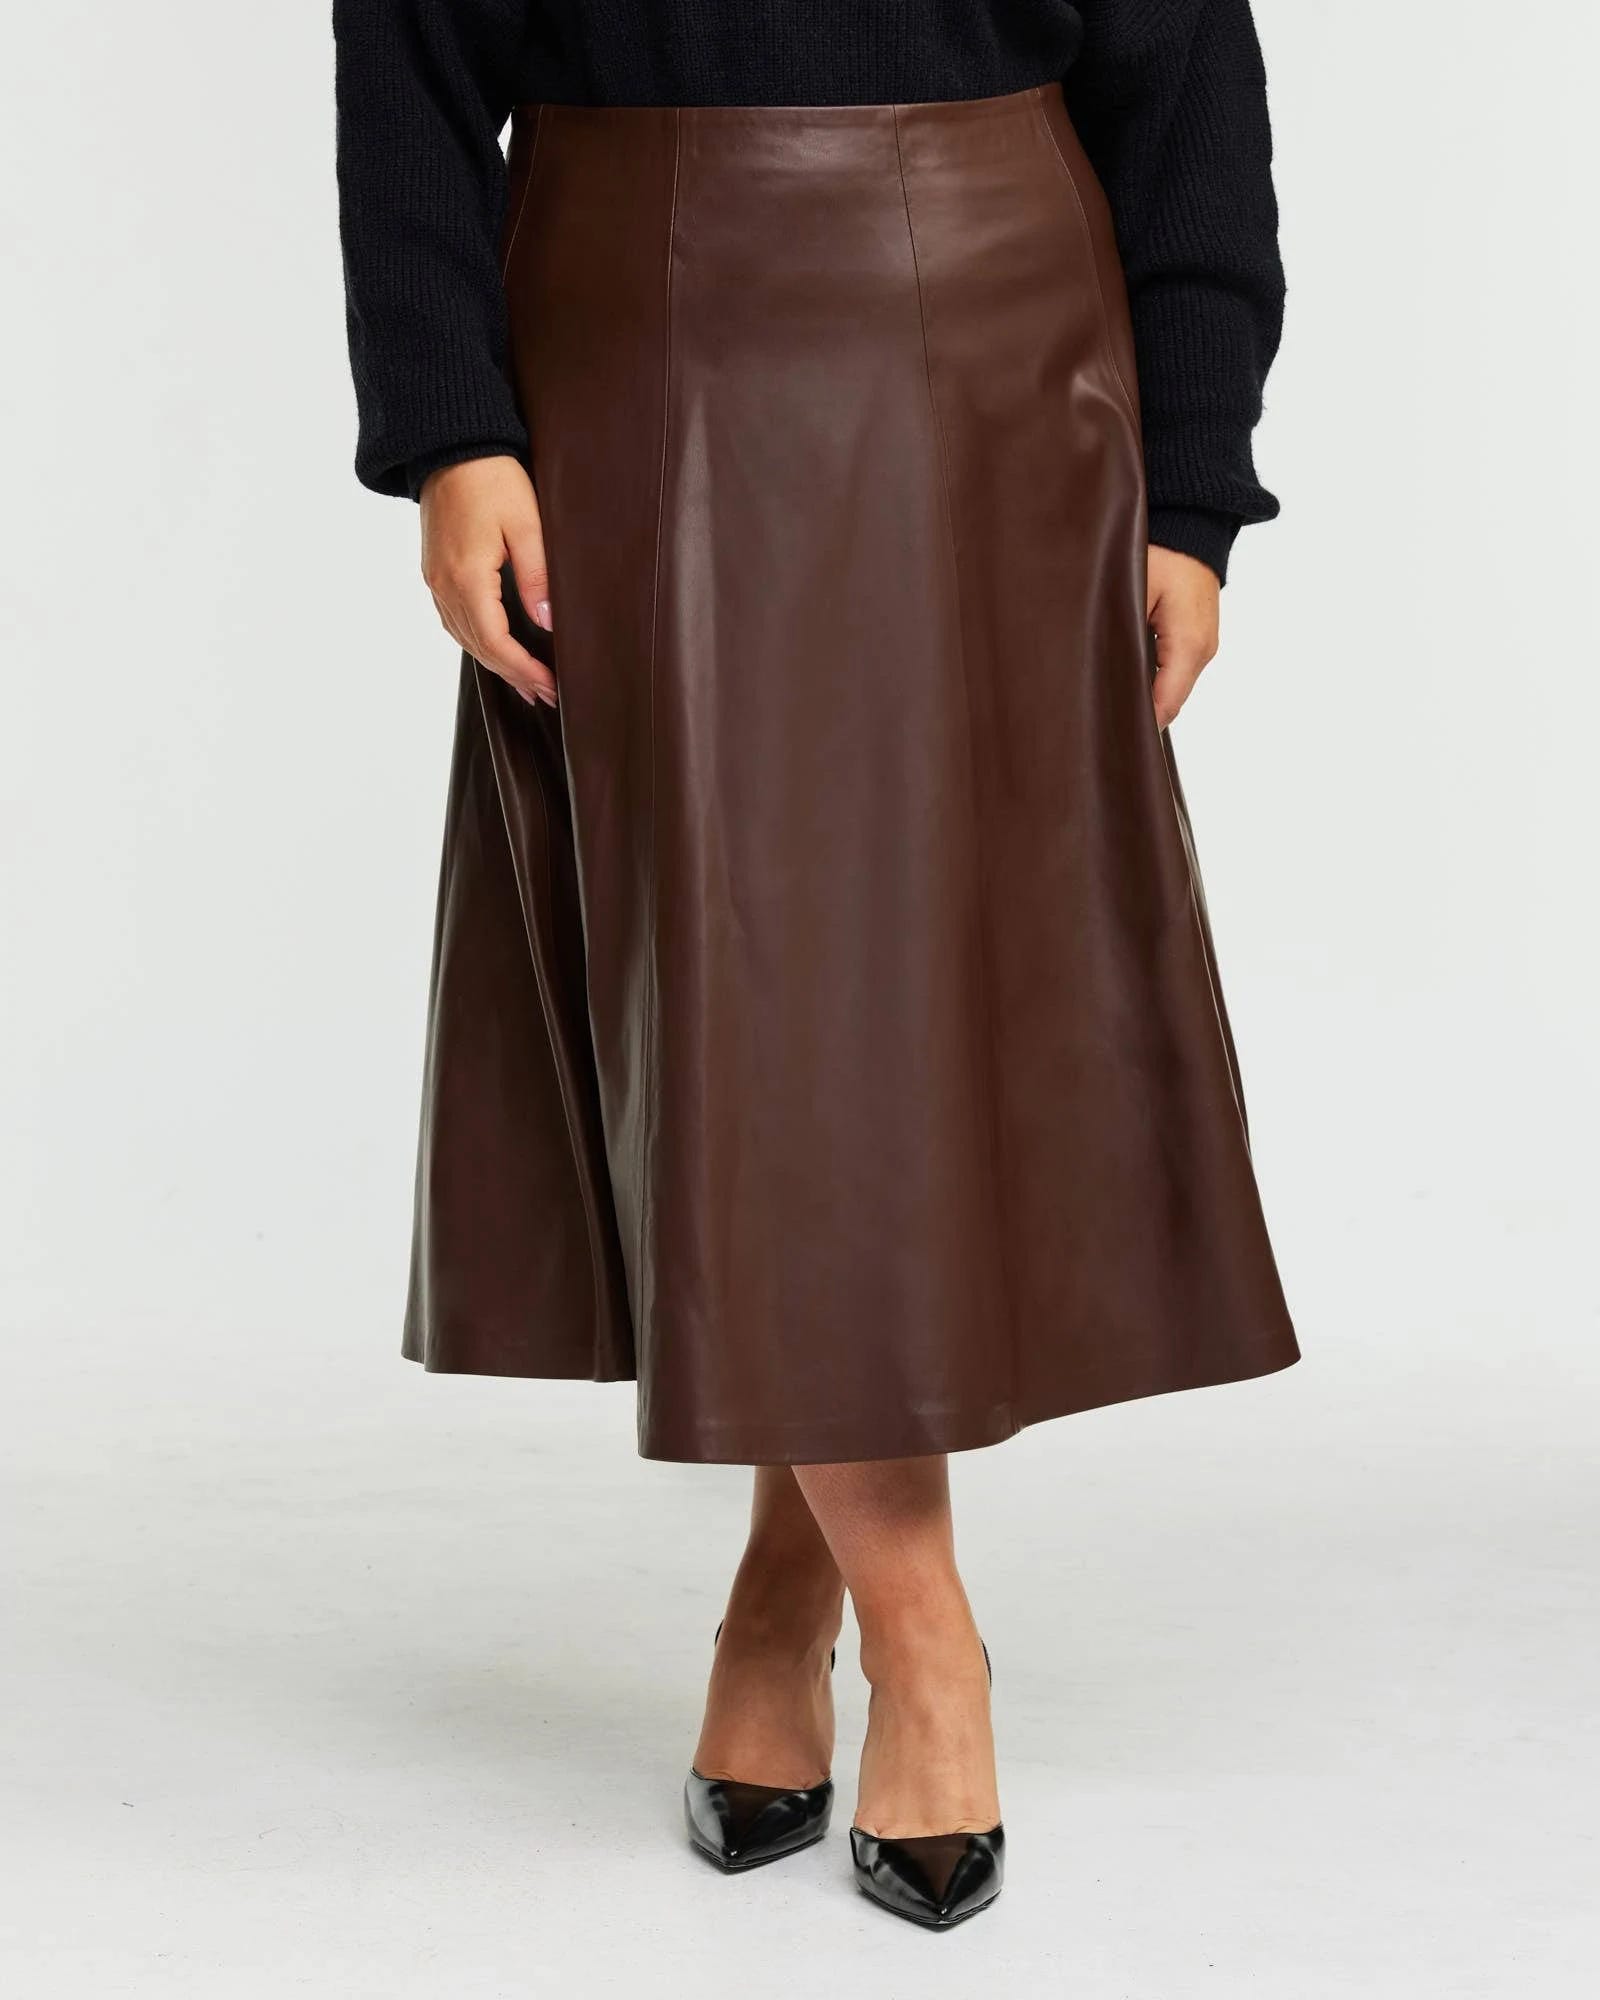 Chic Brown PU Leather Midi Skirt for Modern Fashion | Image